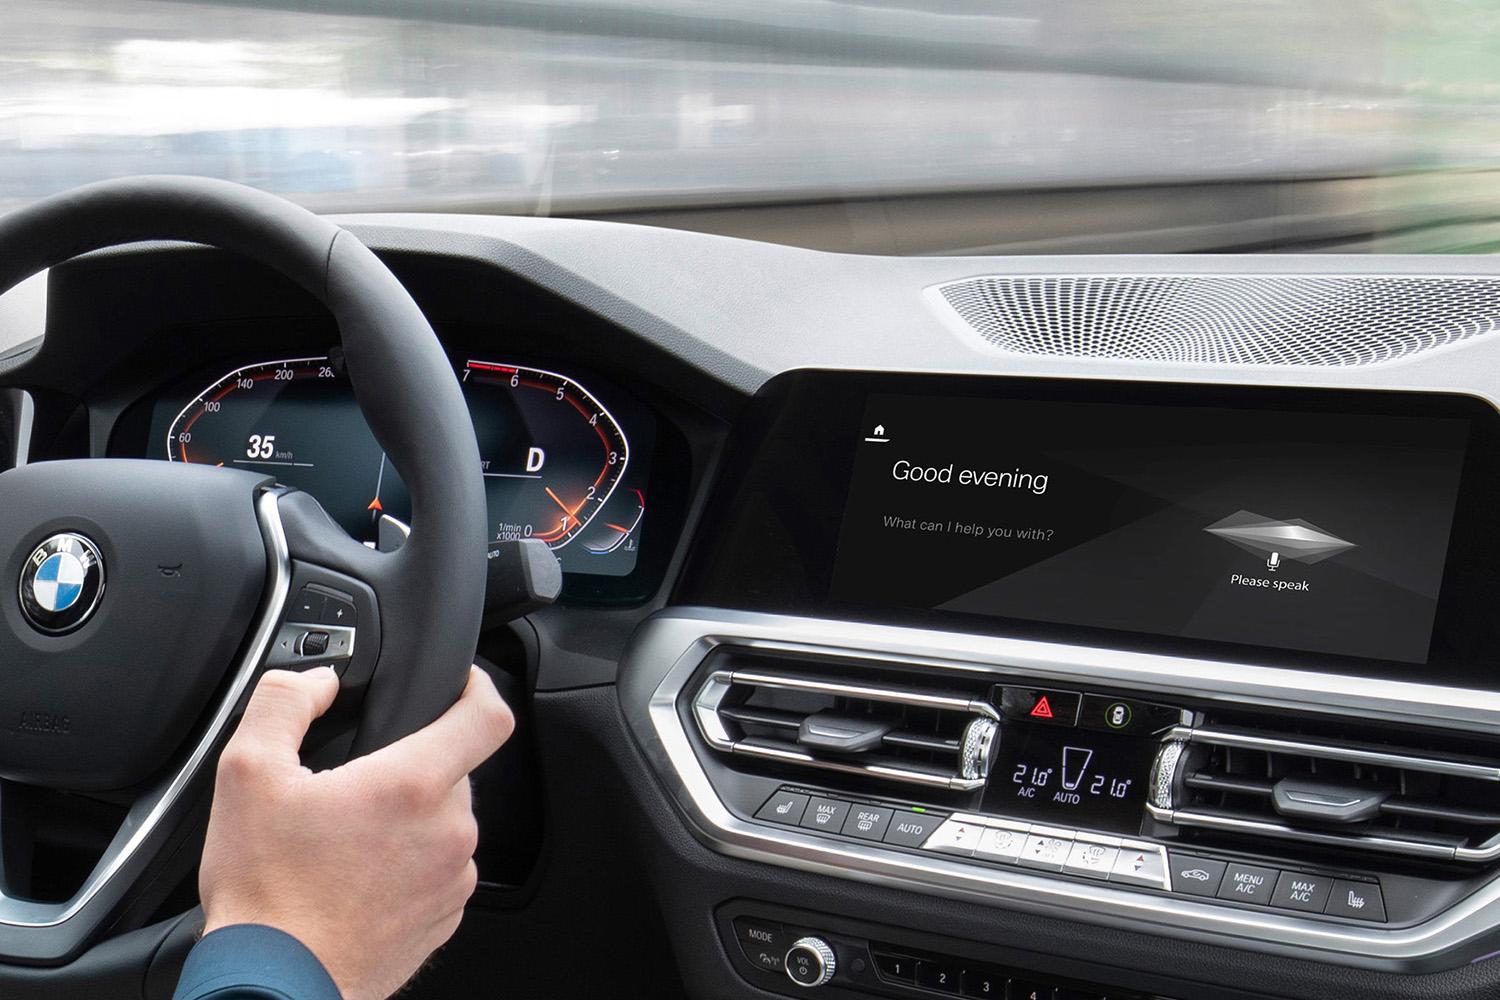 BMWのAI音声会話システム「BMWインテリジェントパーソナルアシスタント」